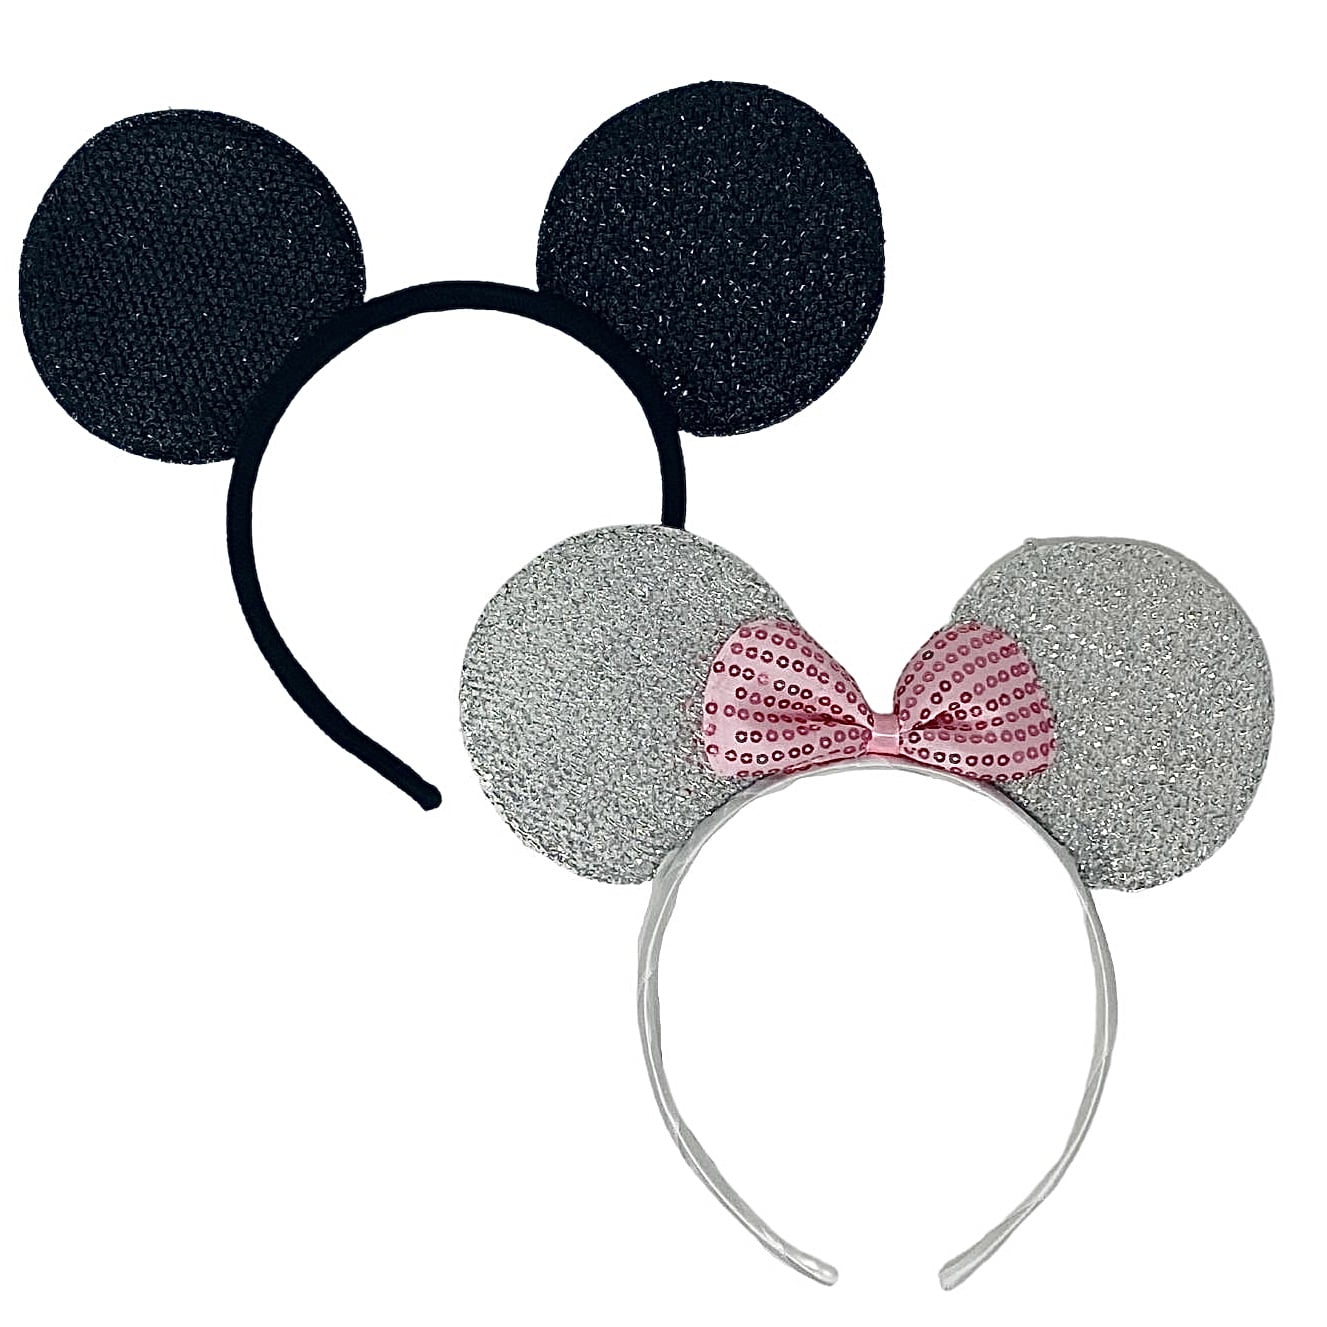 12 pcs Minnie Mouse Ears Shiny Mix Color Headband Party Favors Birthday Costume 